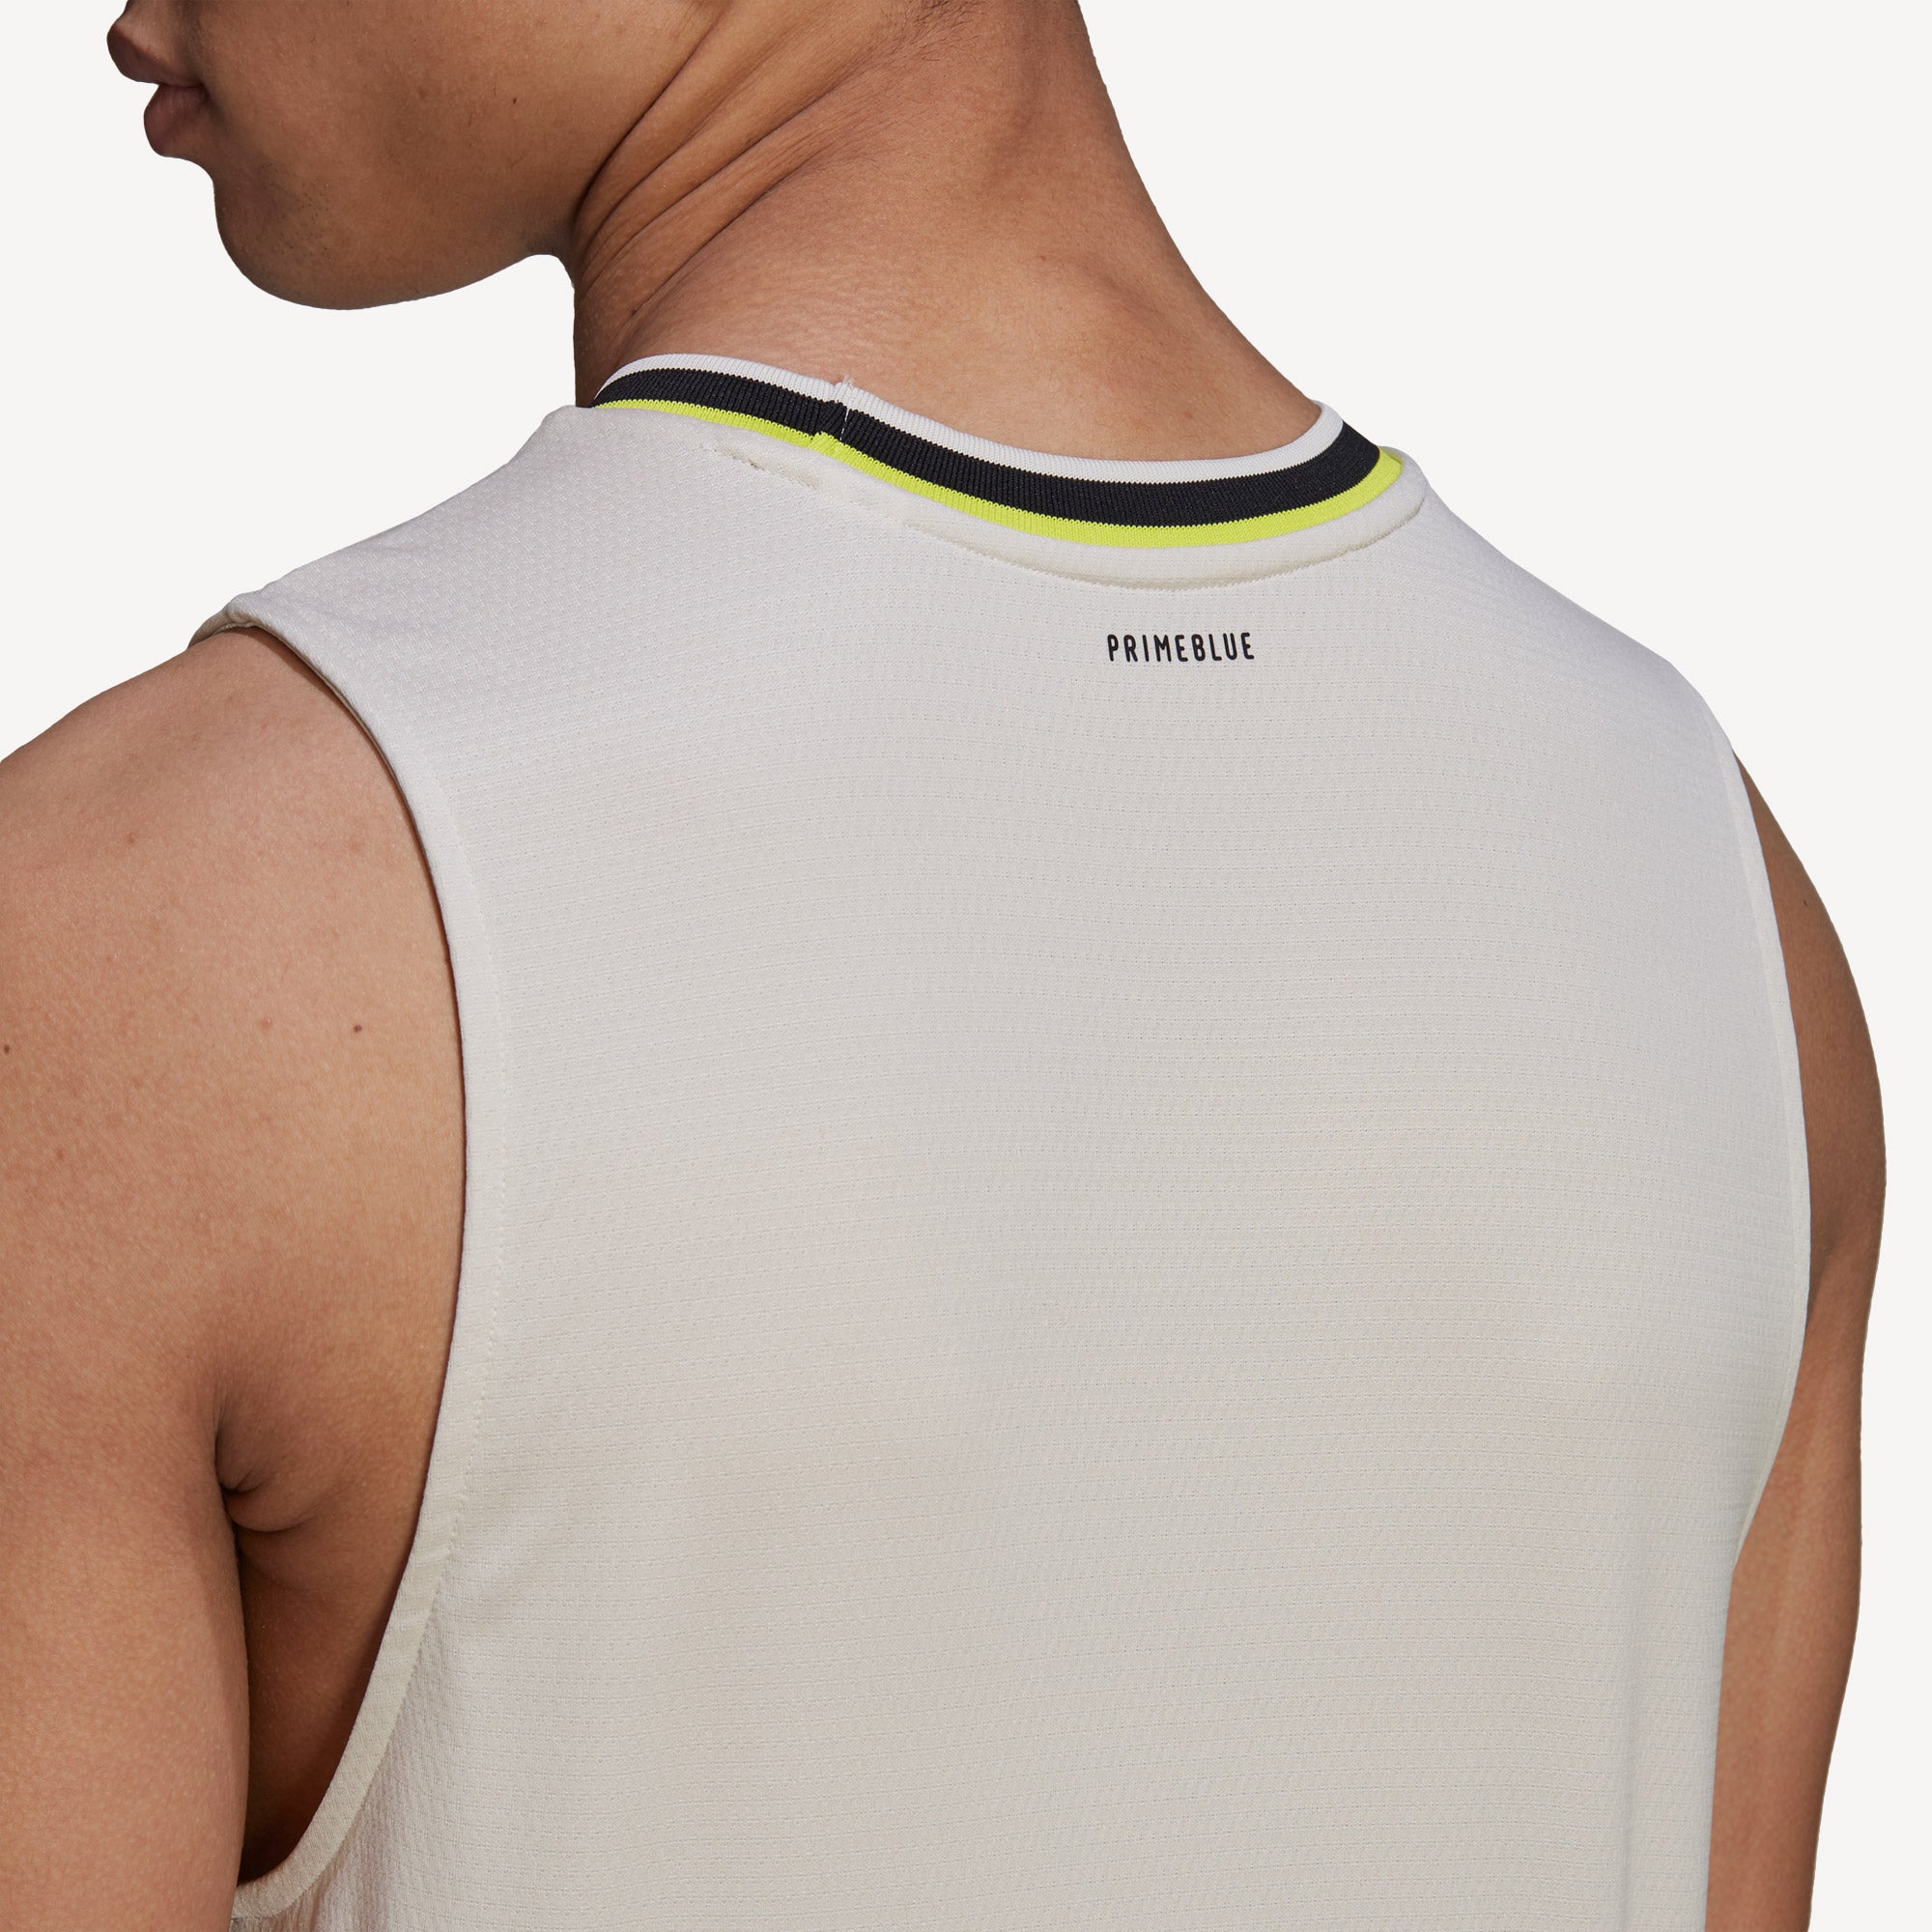 adidas Primeblue Heat Ready Men's Sleeveless Tennis Shirt Grey (5)